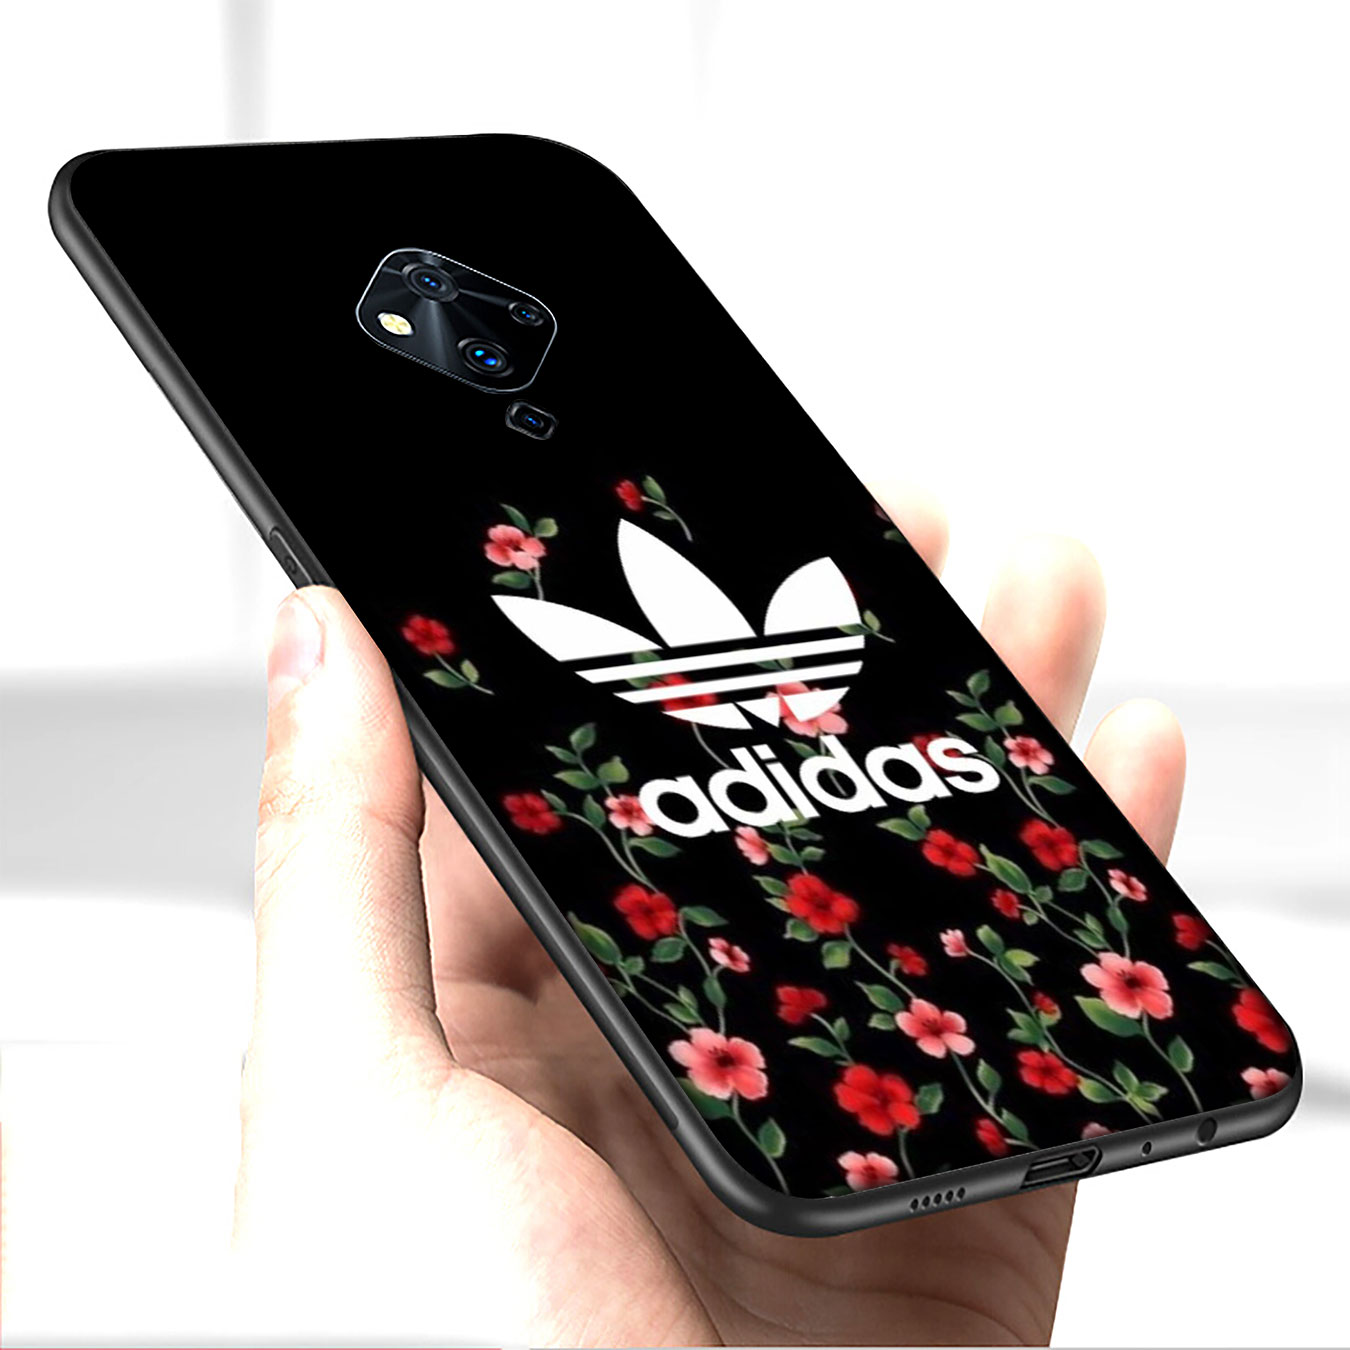 Ốp điện thoại silicon mềm họa tiết logo Adidas cho Samsung Galaxy S9 S10 S20 FE Ultra Plus Lite S20+ S9+ S10+ S20Plus